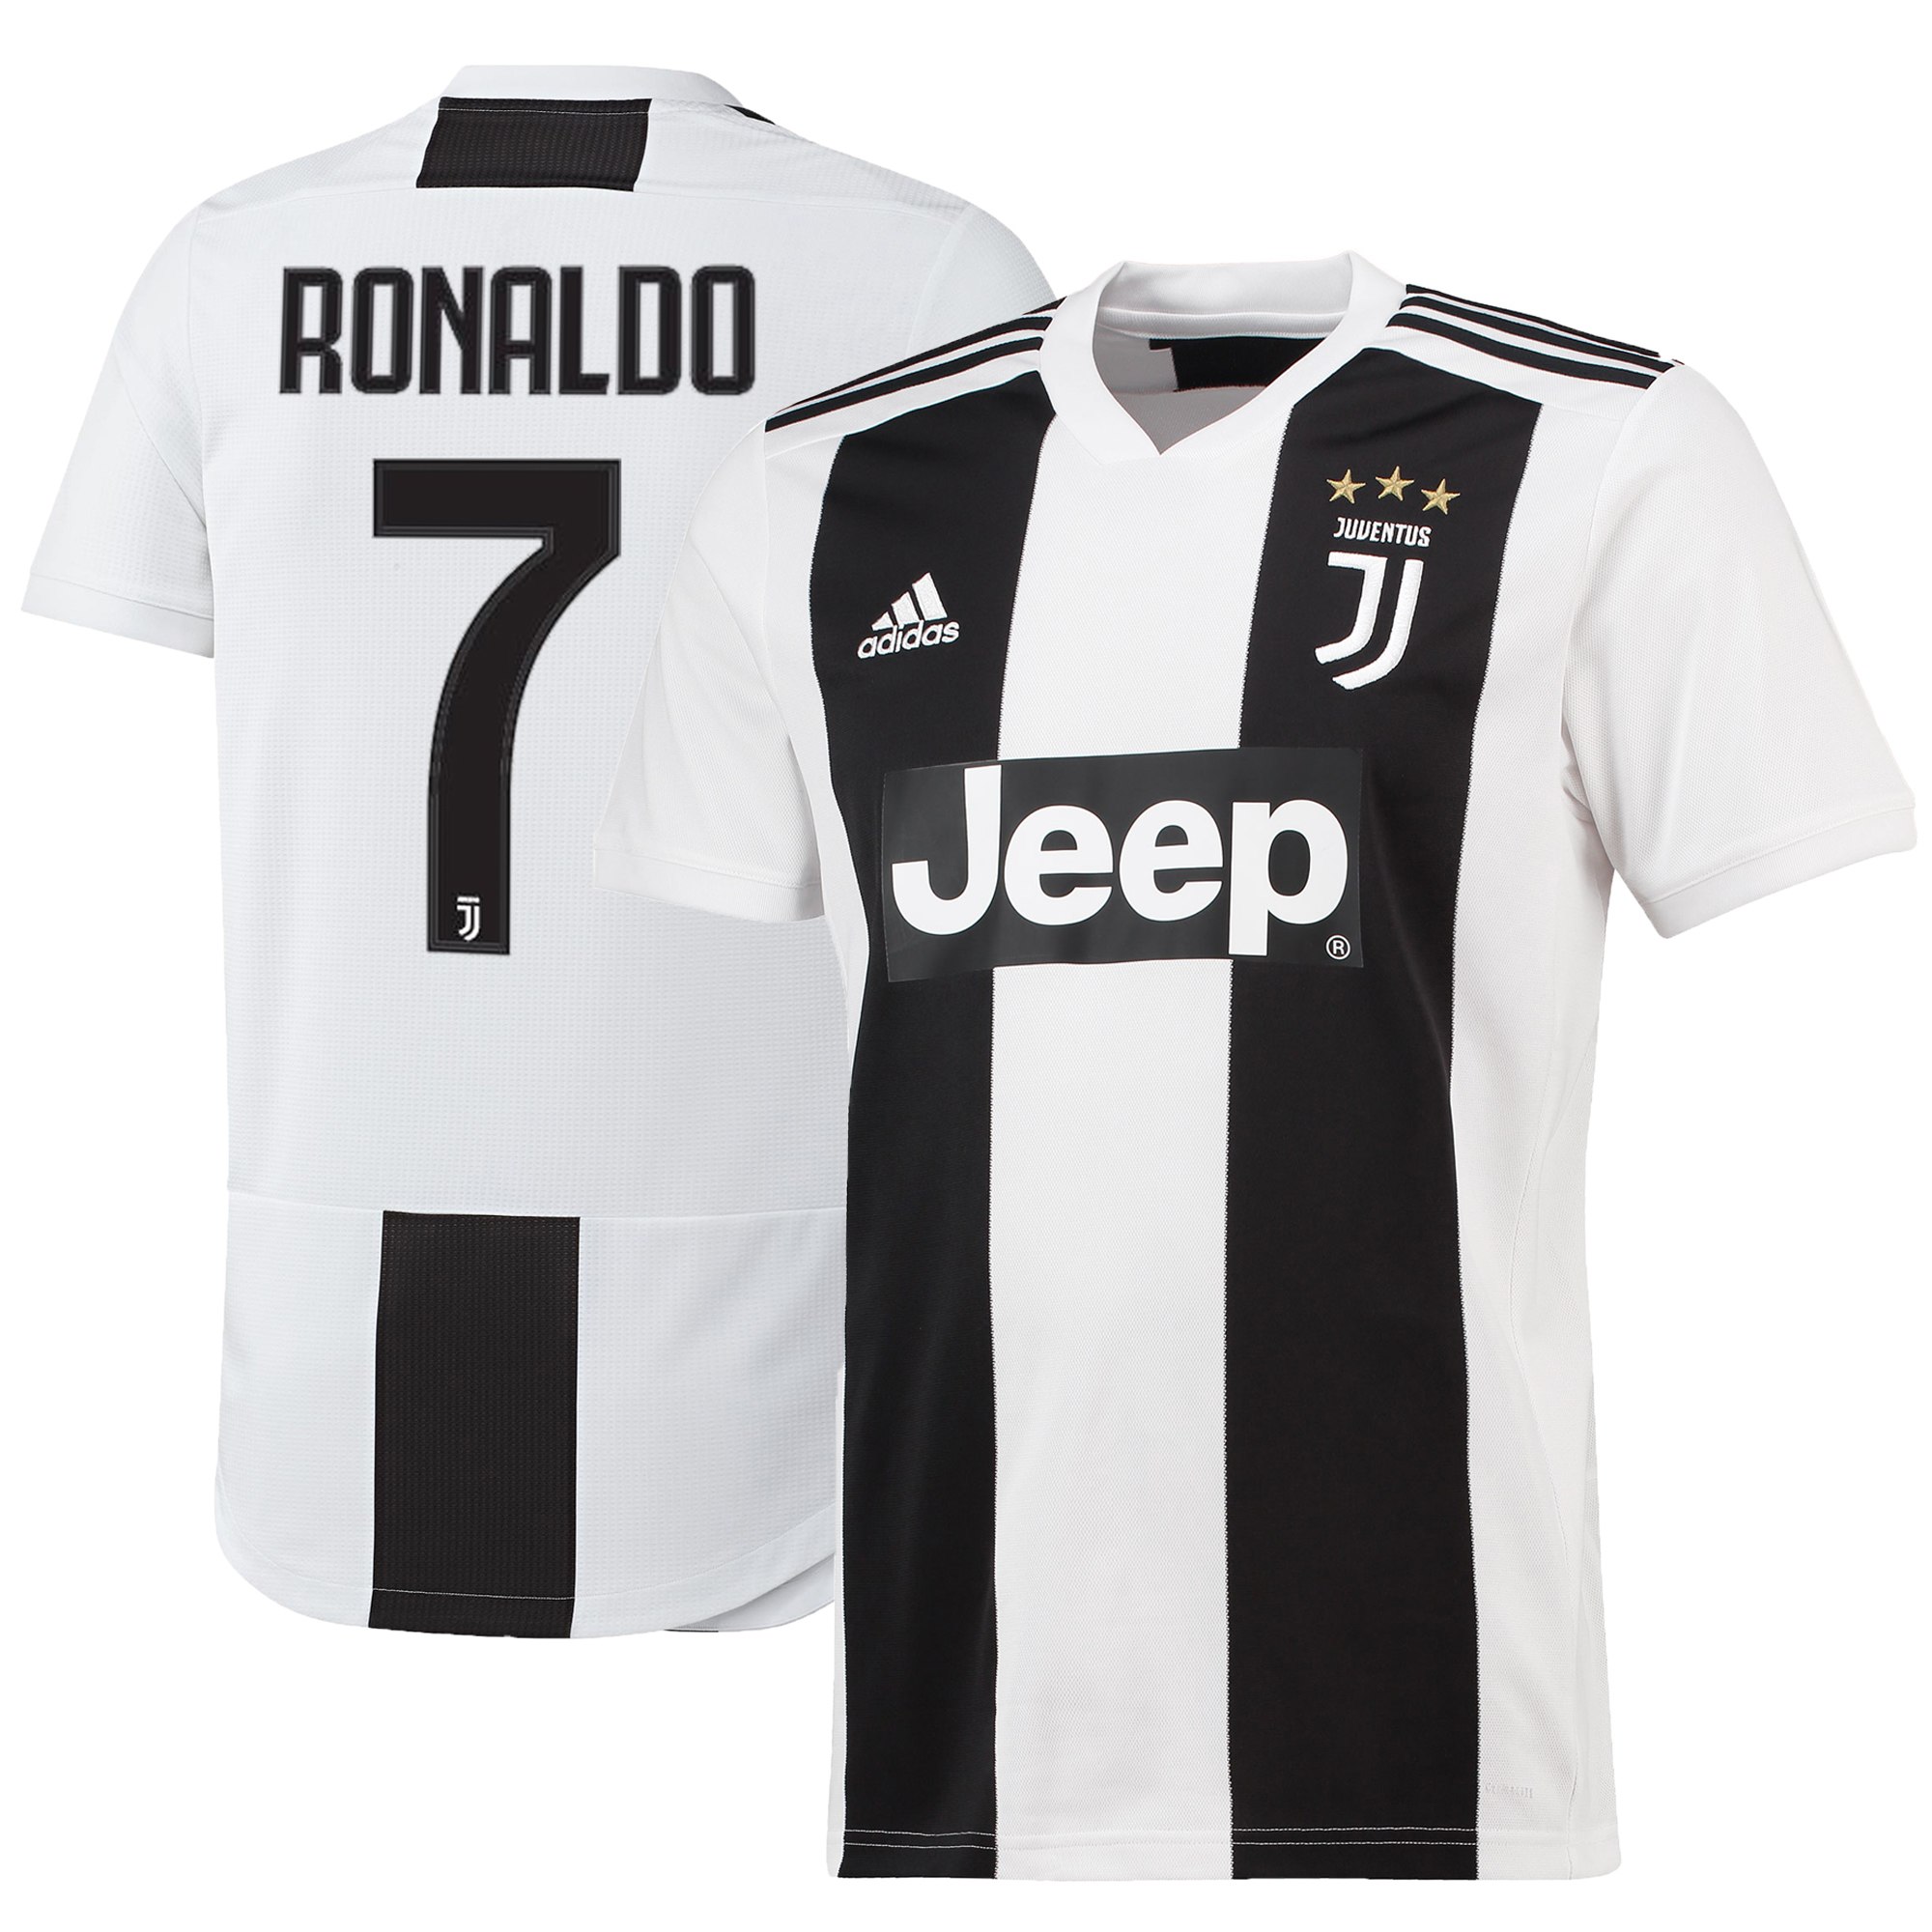 Cristiano Ronaldo Juventus Jersey & Gear 2018 | Heavy.com